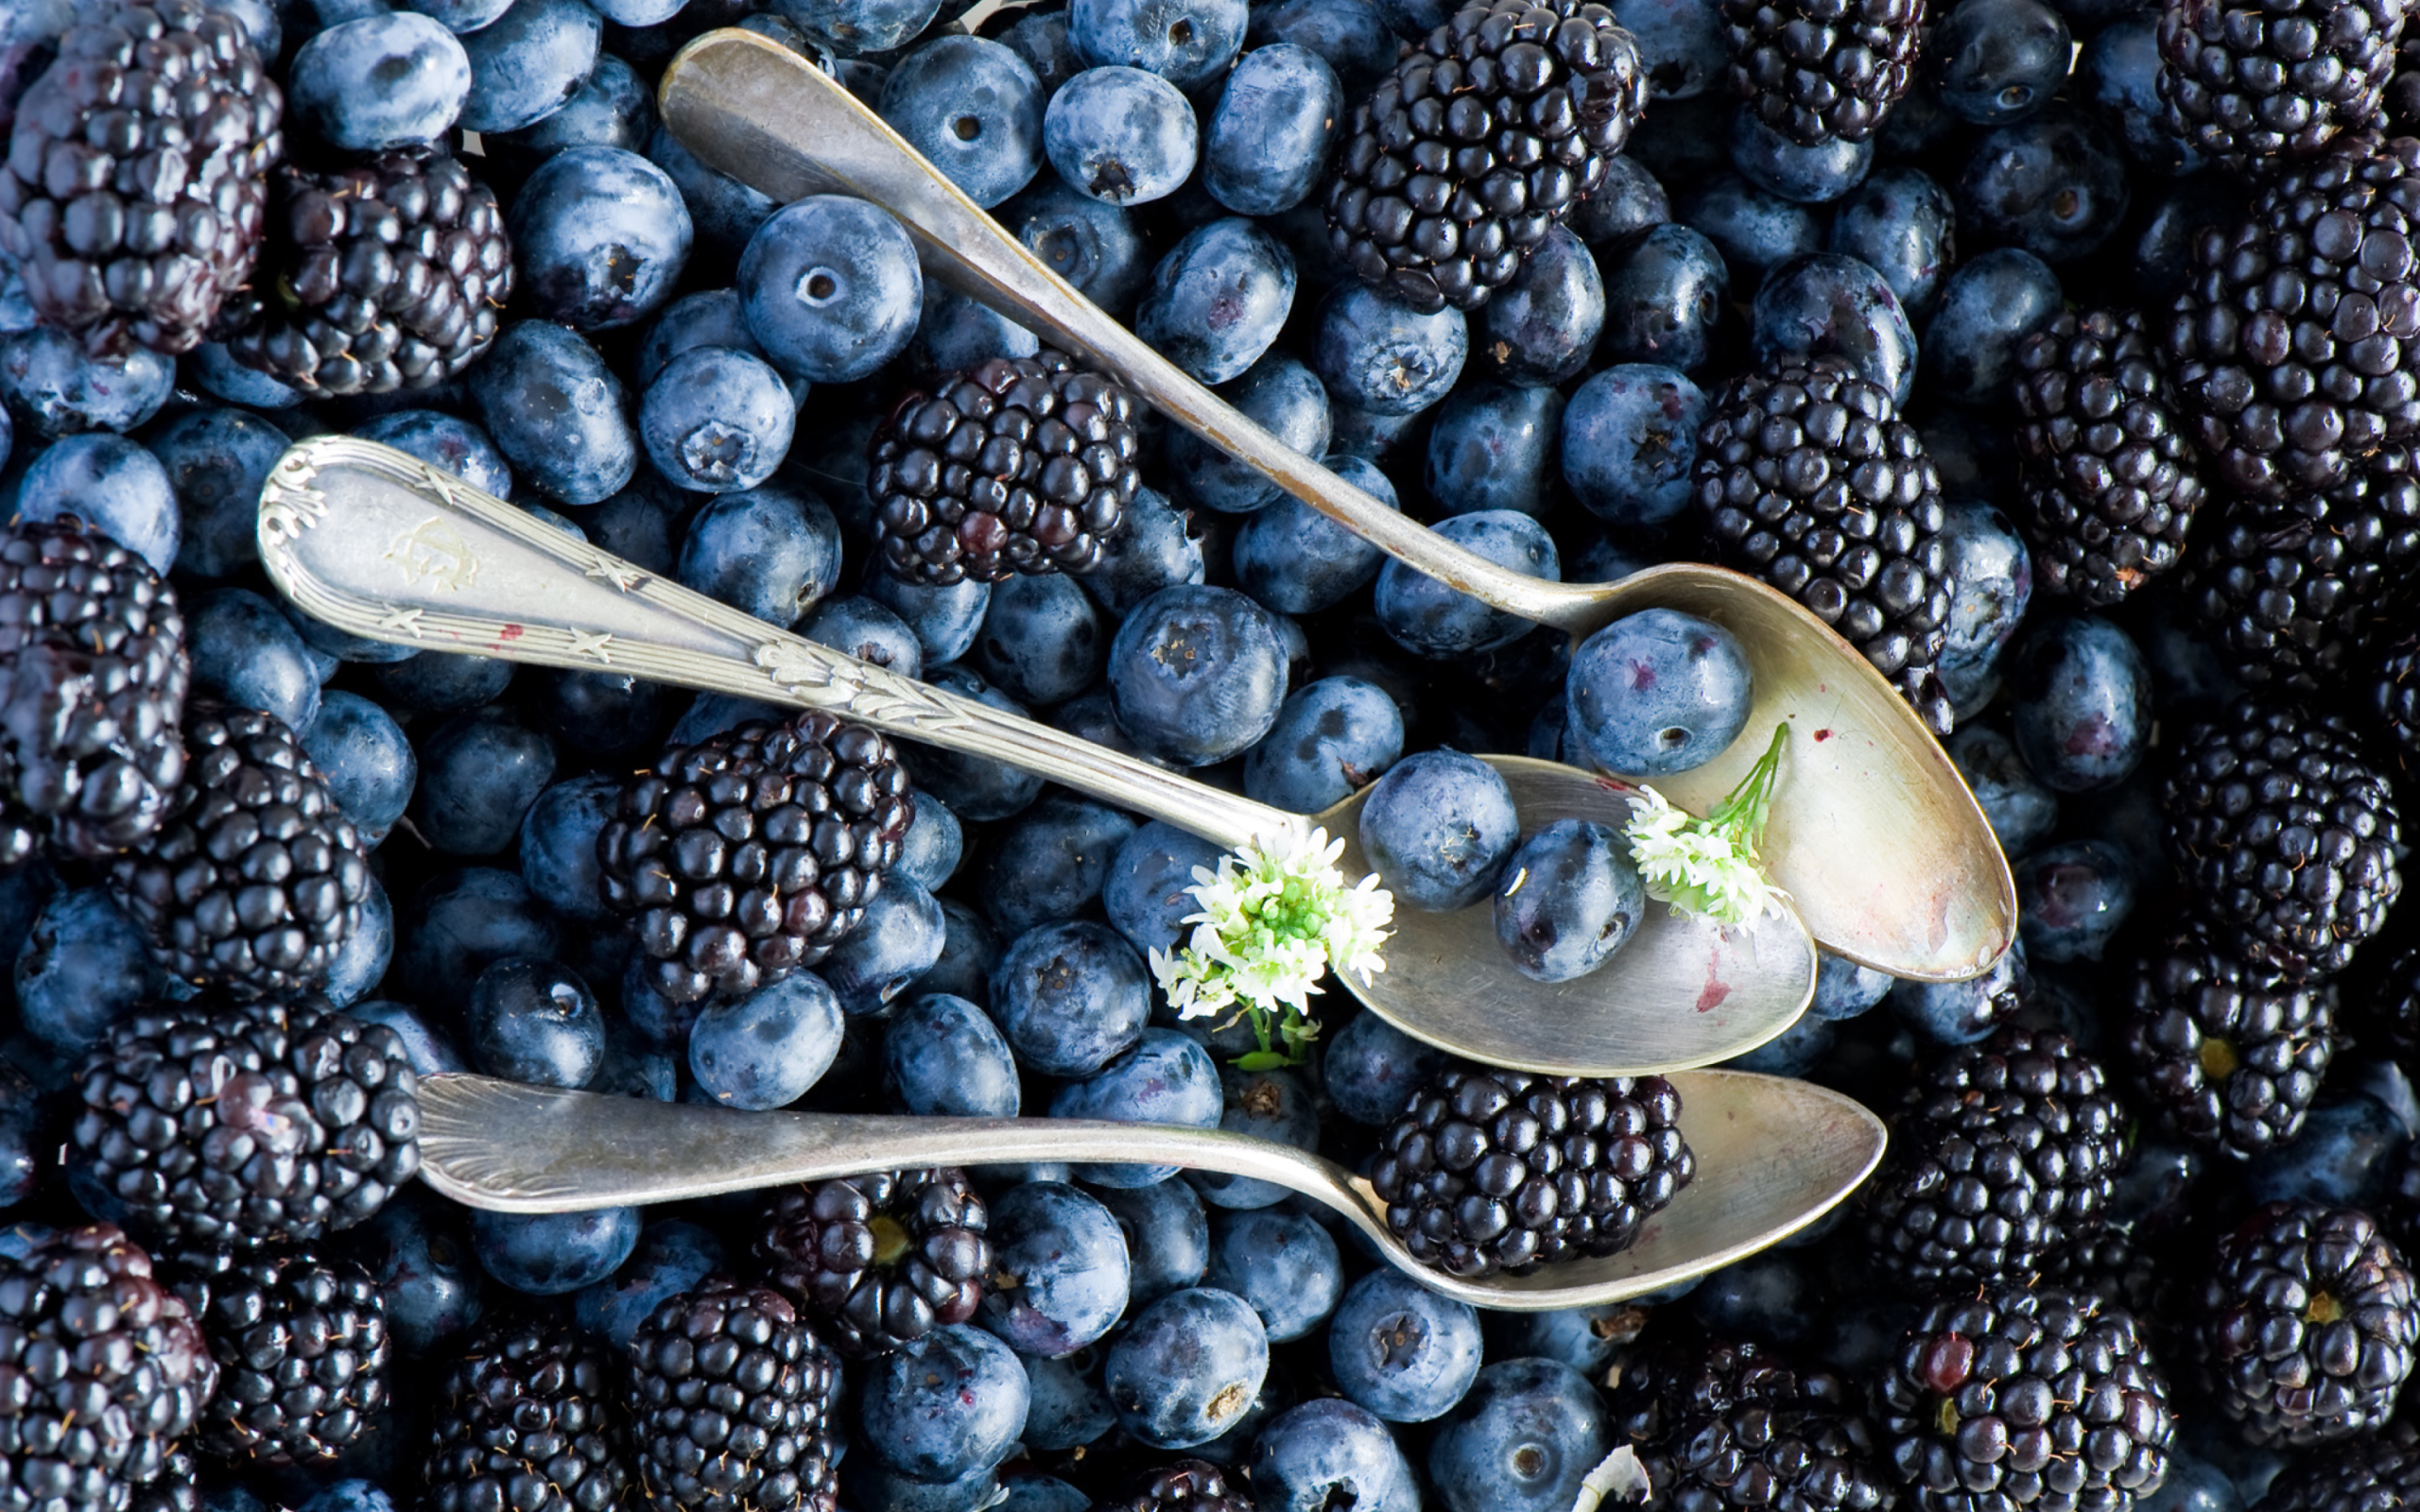 Sfondi Blueberries And Blackberries 2560x1600